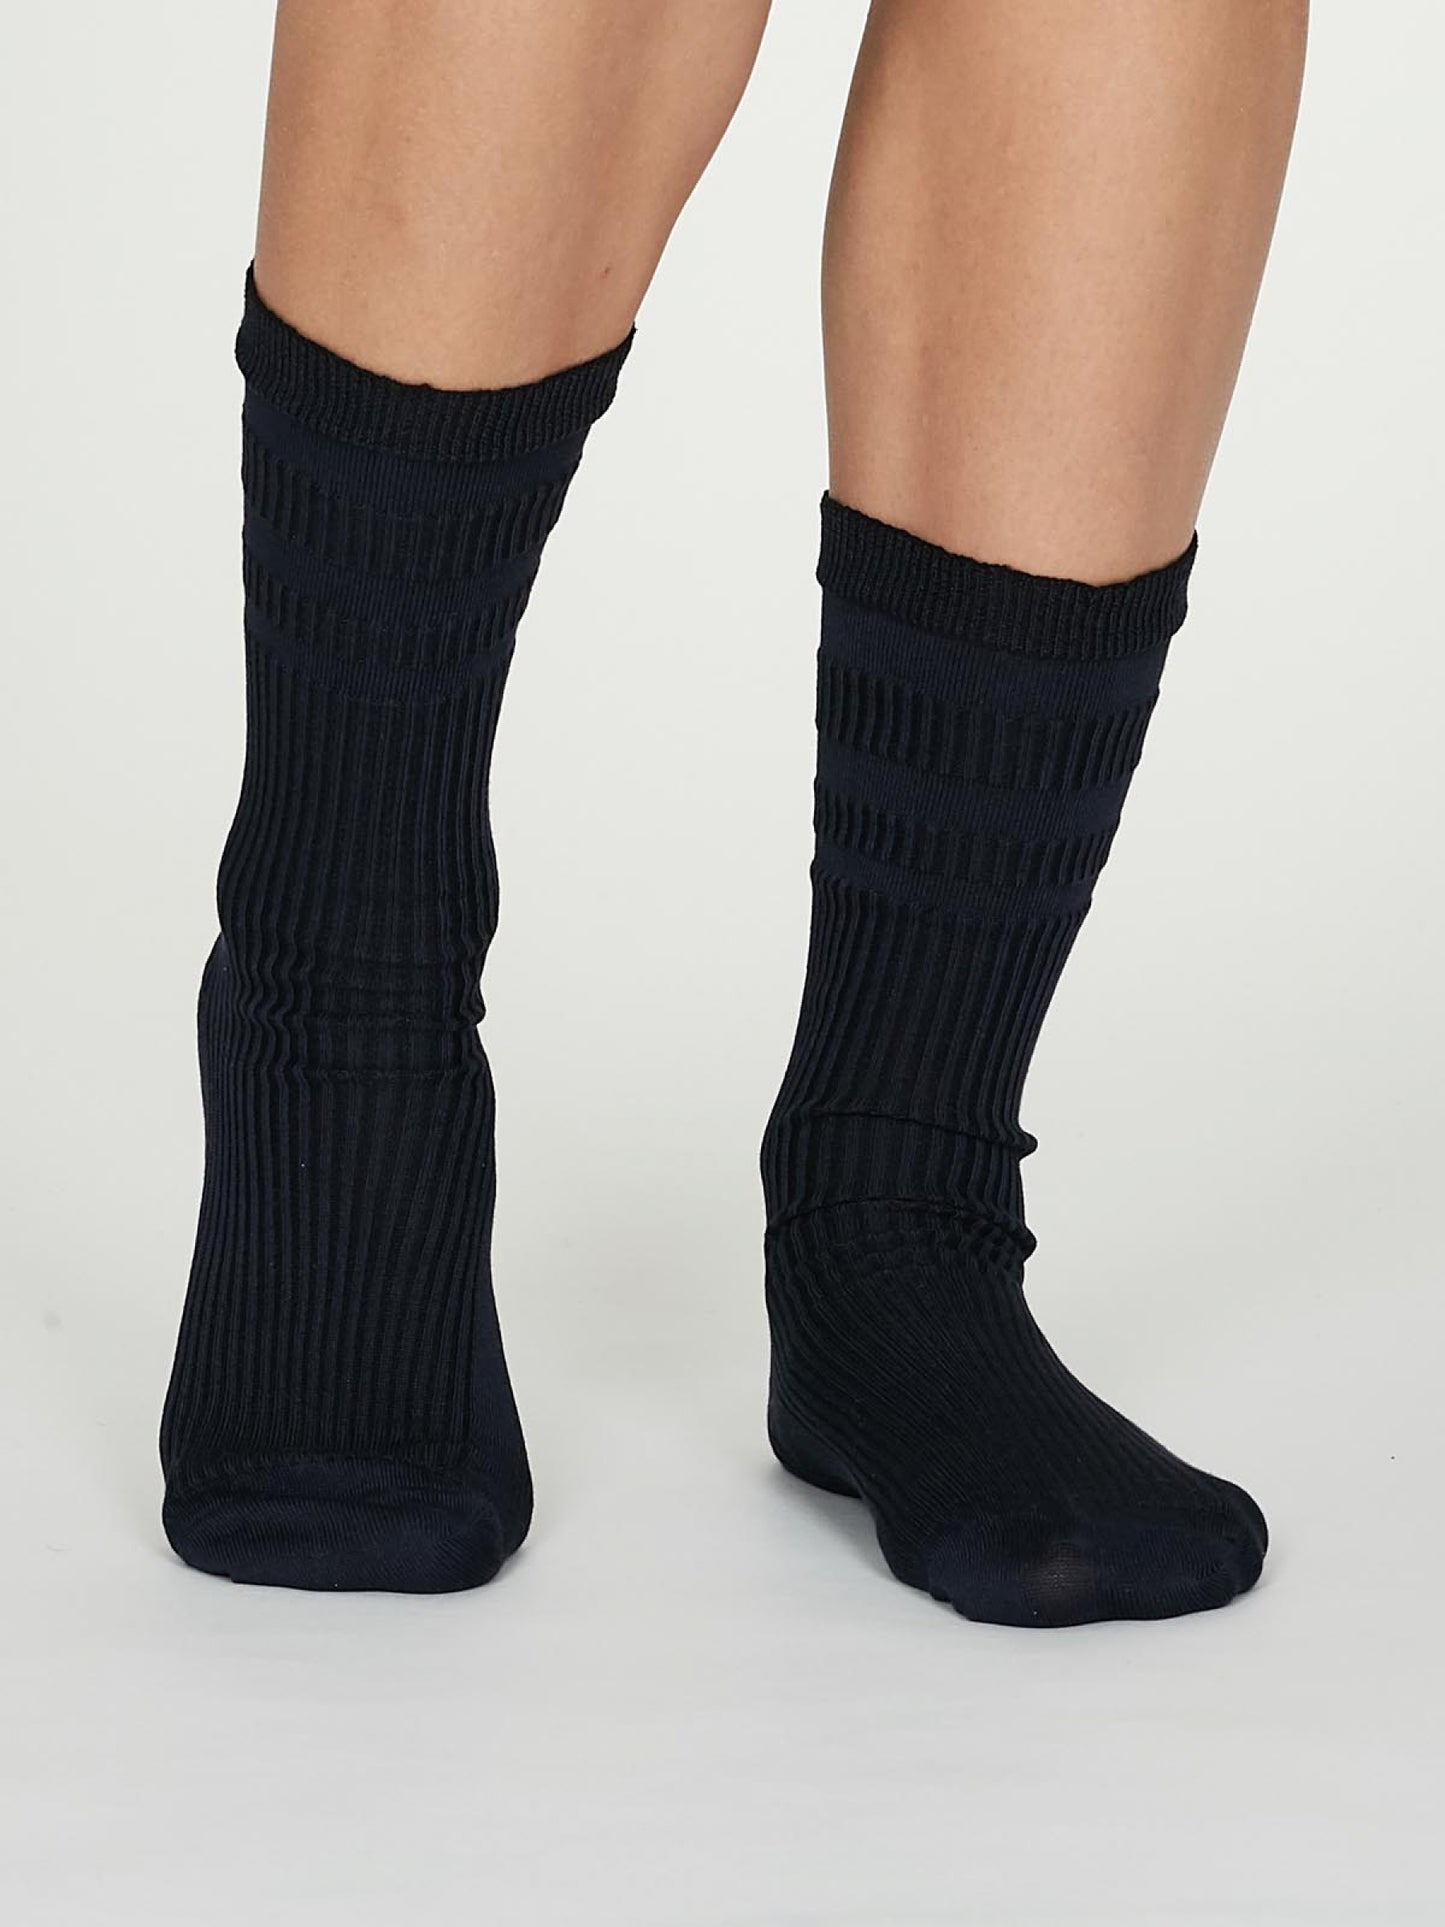 Beatrice-2 - SeaCell - Modal - Socks